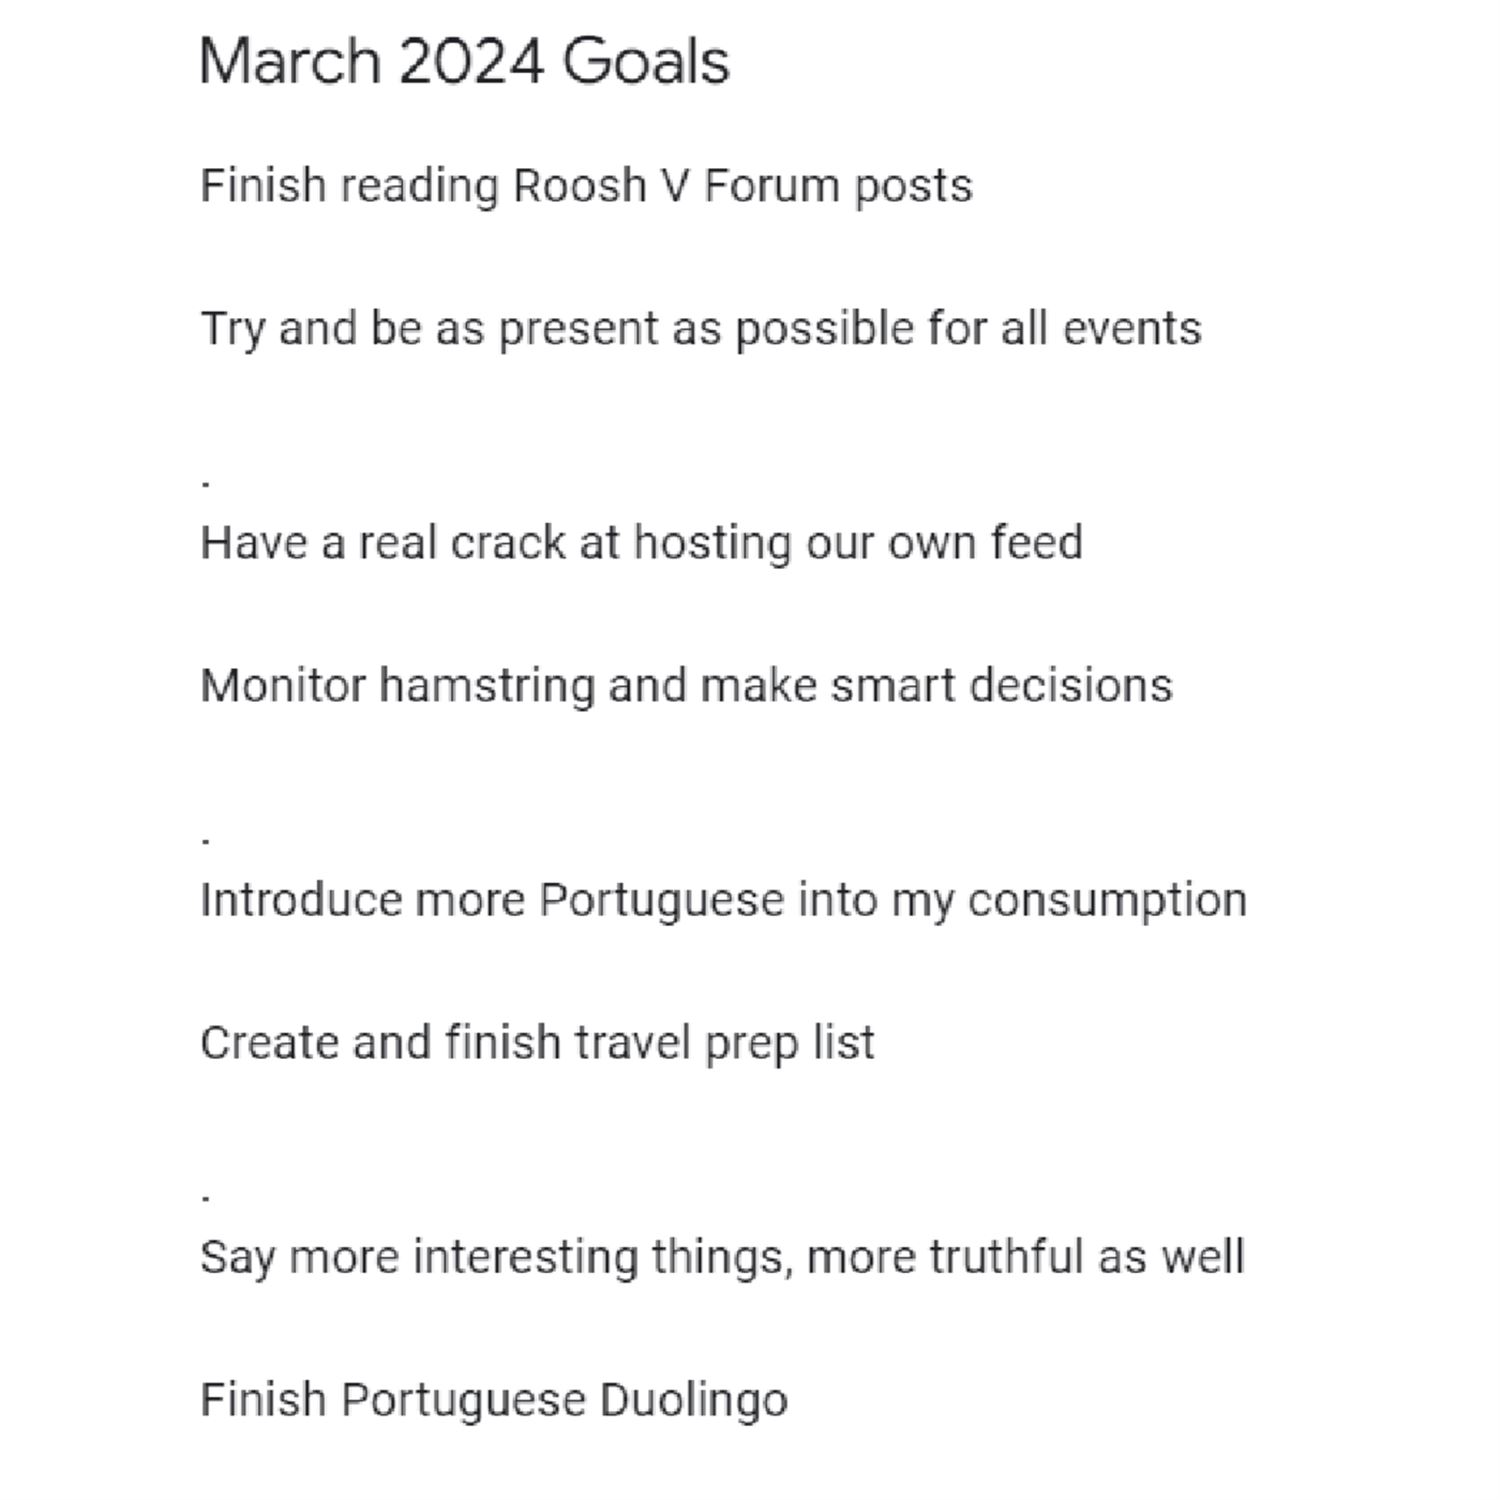 Kyrin's March 2024 Goals